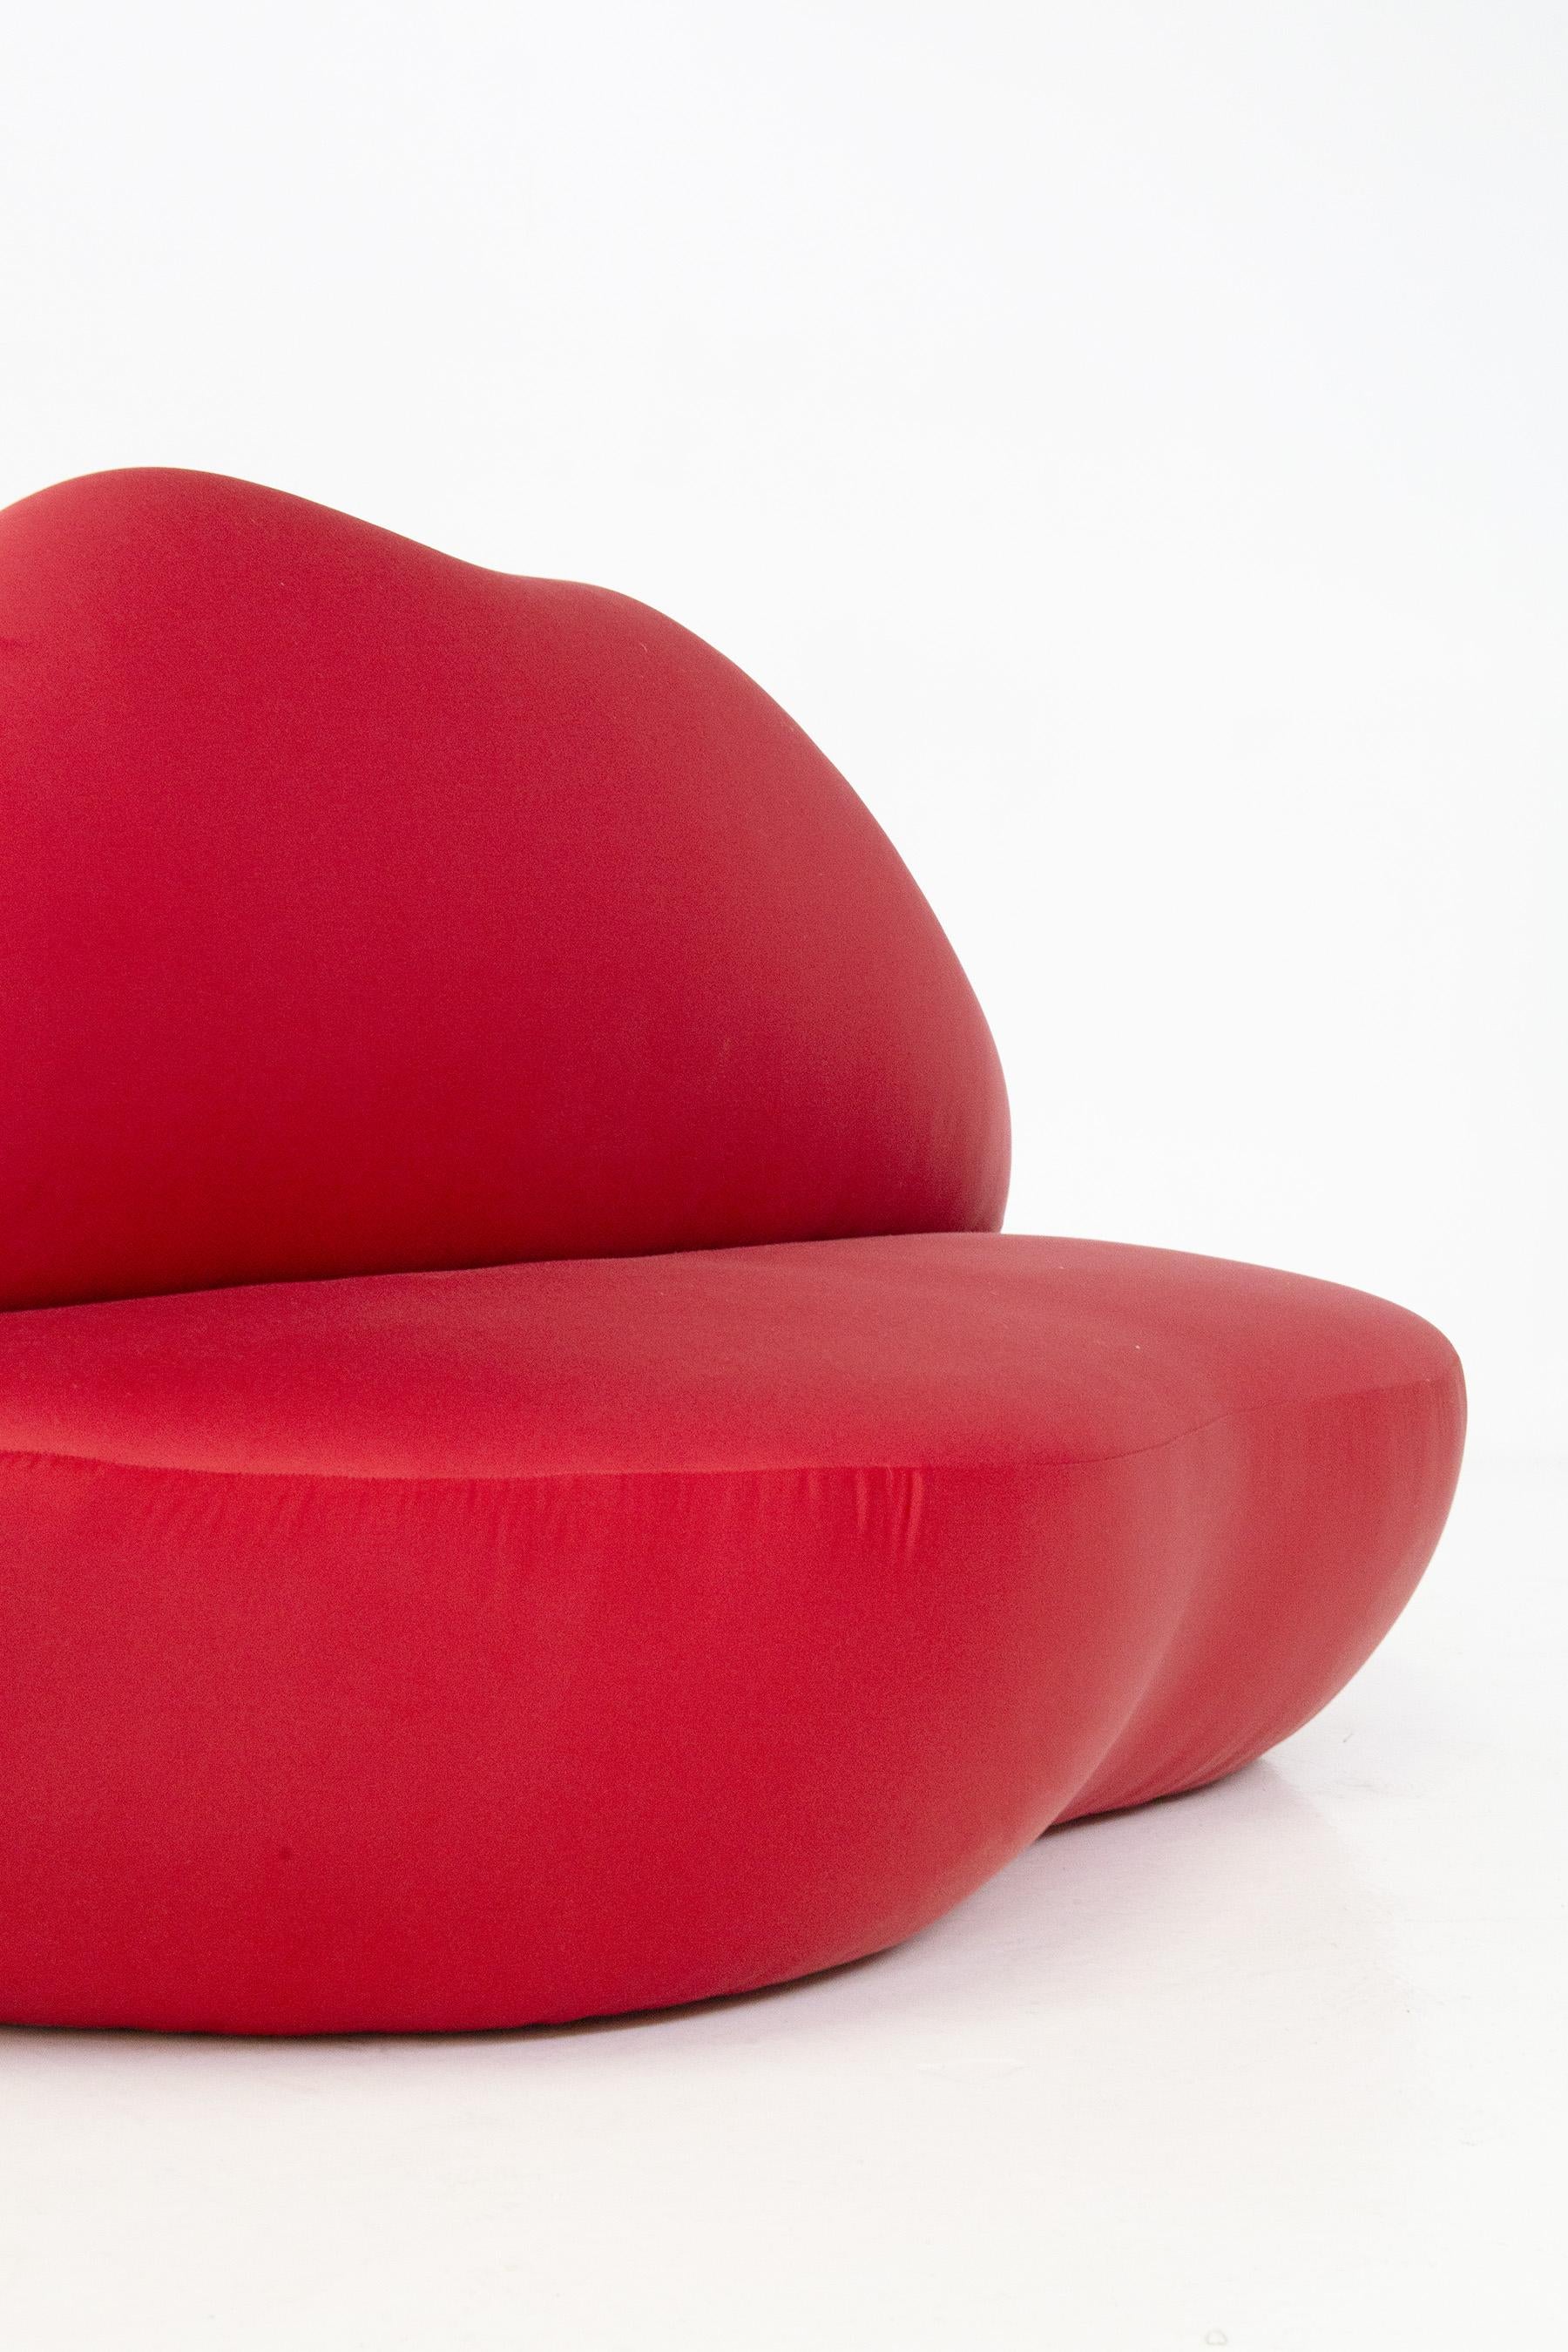 Fabric Iconic Italian Red Sofa Mod. Bocca Attributed. to Edra Studio 65